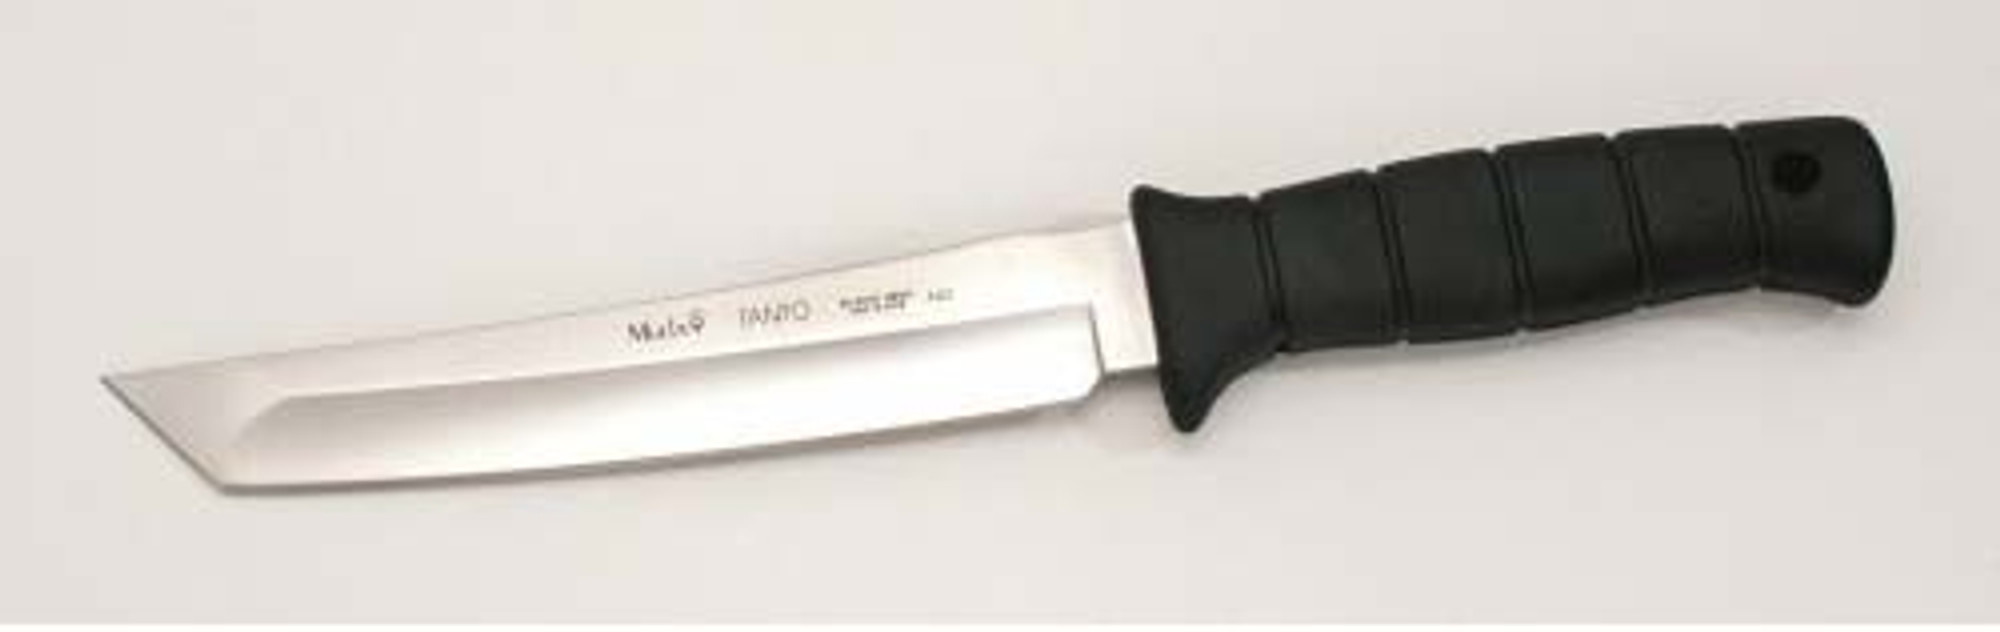 MUELA TANTO-19W, X50CrMoV15, 7-5/8" Fixed Blade Hunting Knife, Kraton Handle